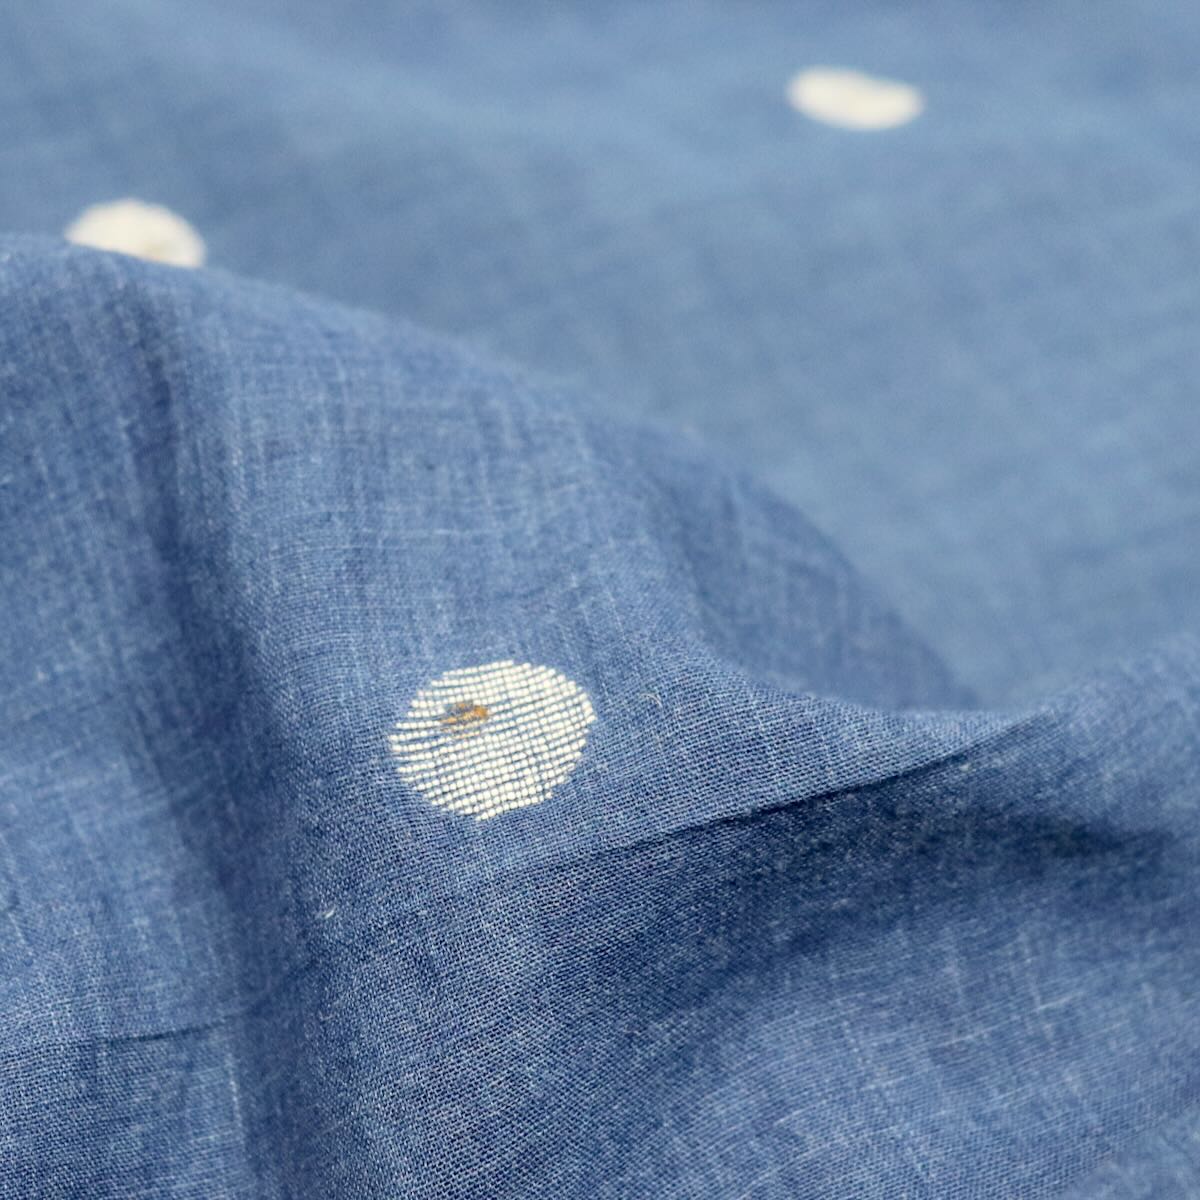 Swatch — Indigo Drop Jamdani Handloom Cotton